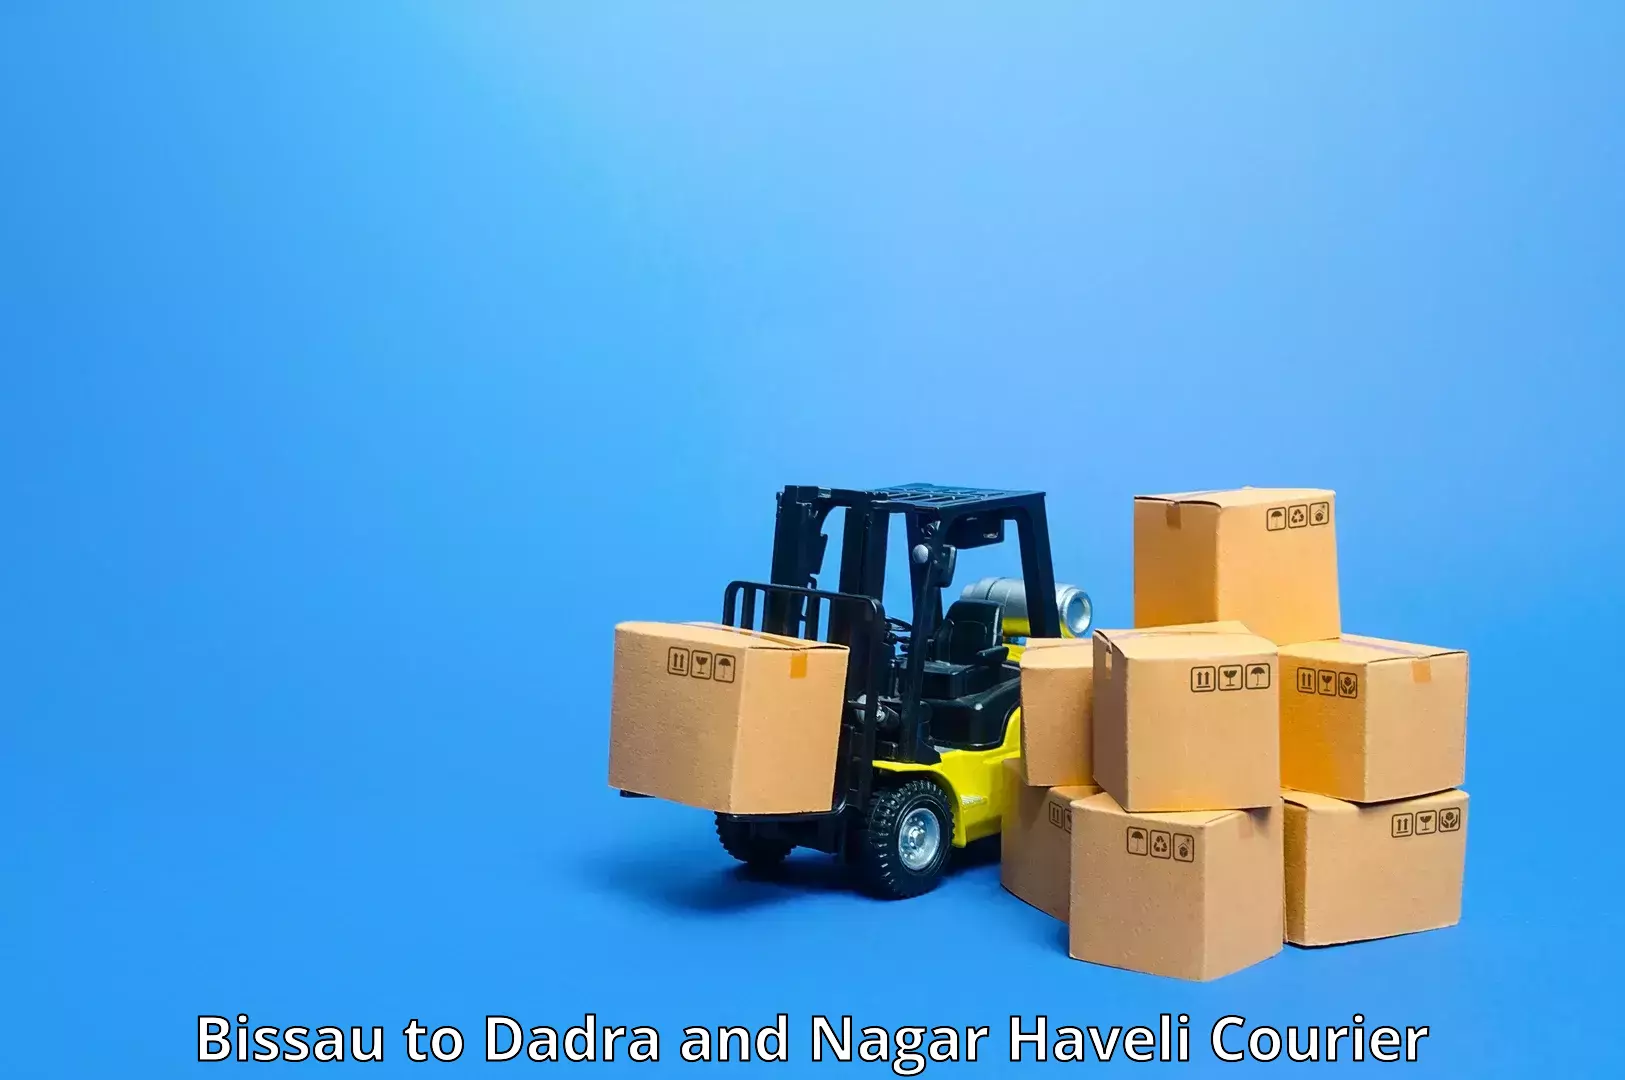 Express postal services Bissau to Dadra and Nagar Haveli